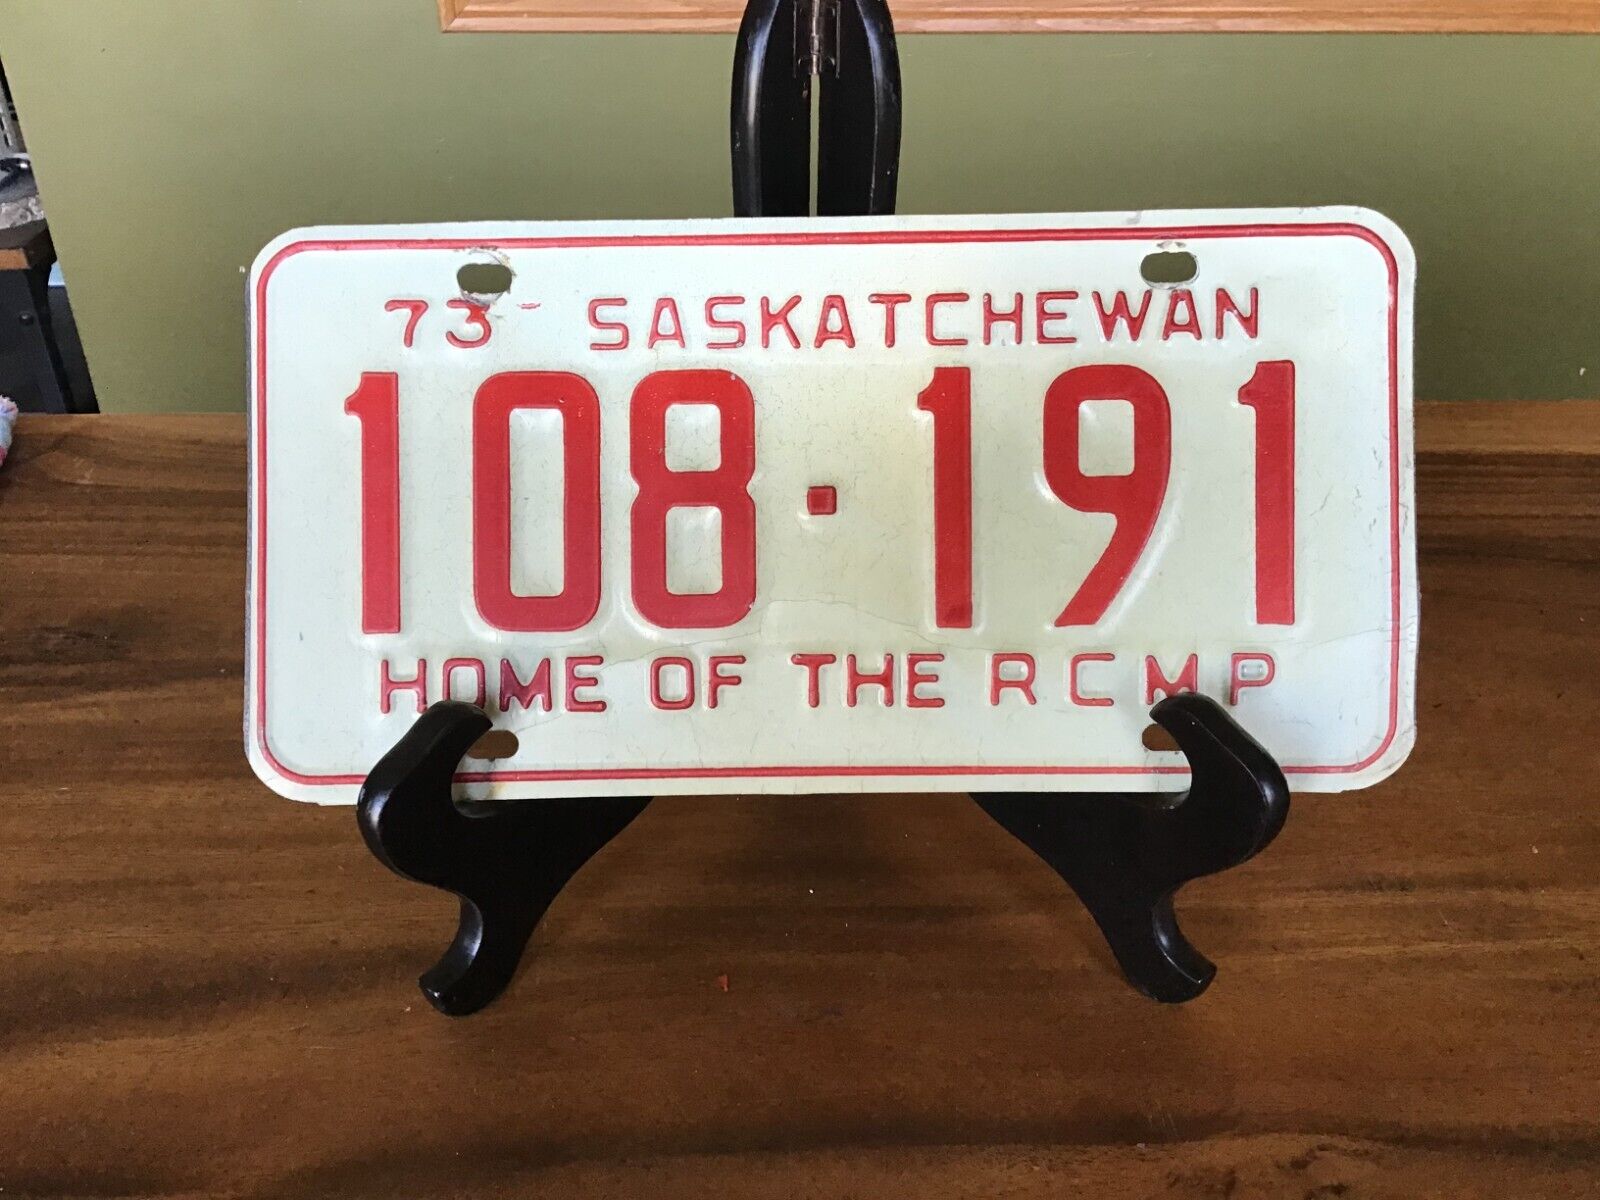 VINTAGE 1973 Saskatchewan LICENSE PLATE Set # 108 - 191 - Home of the RCMP